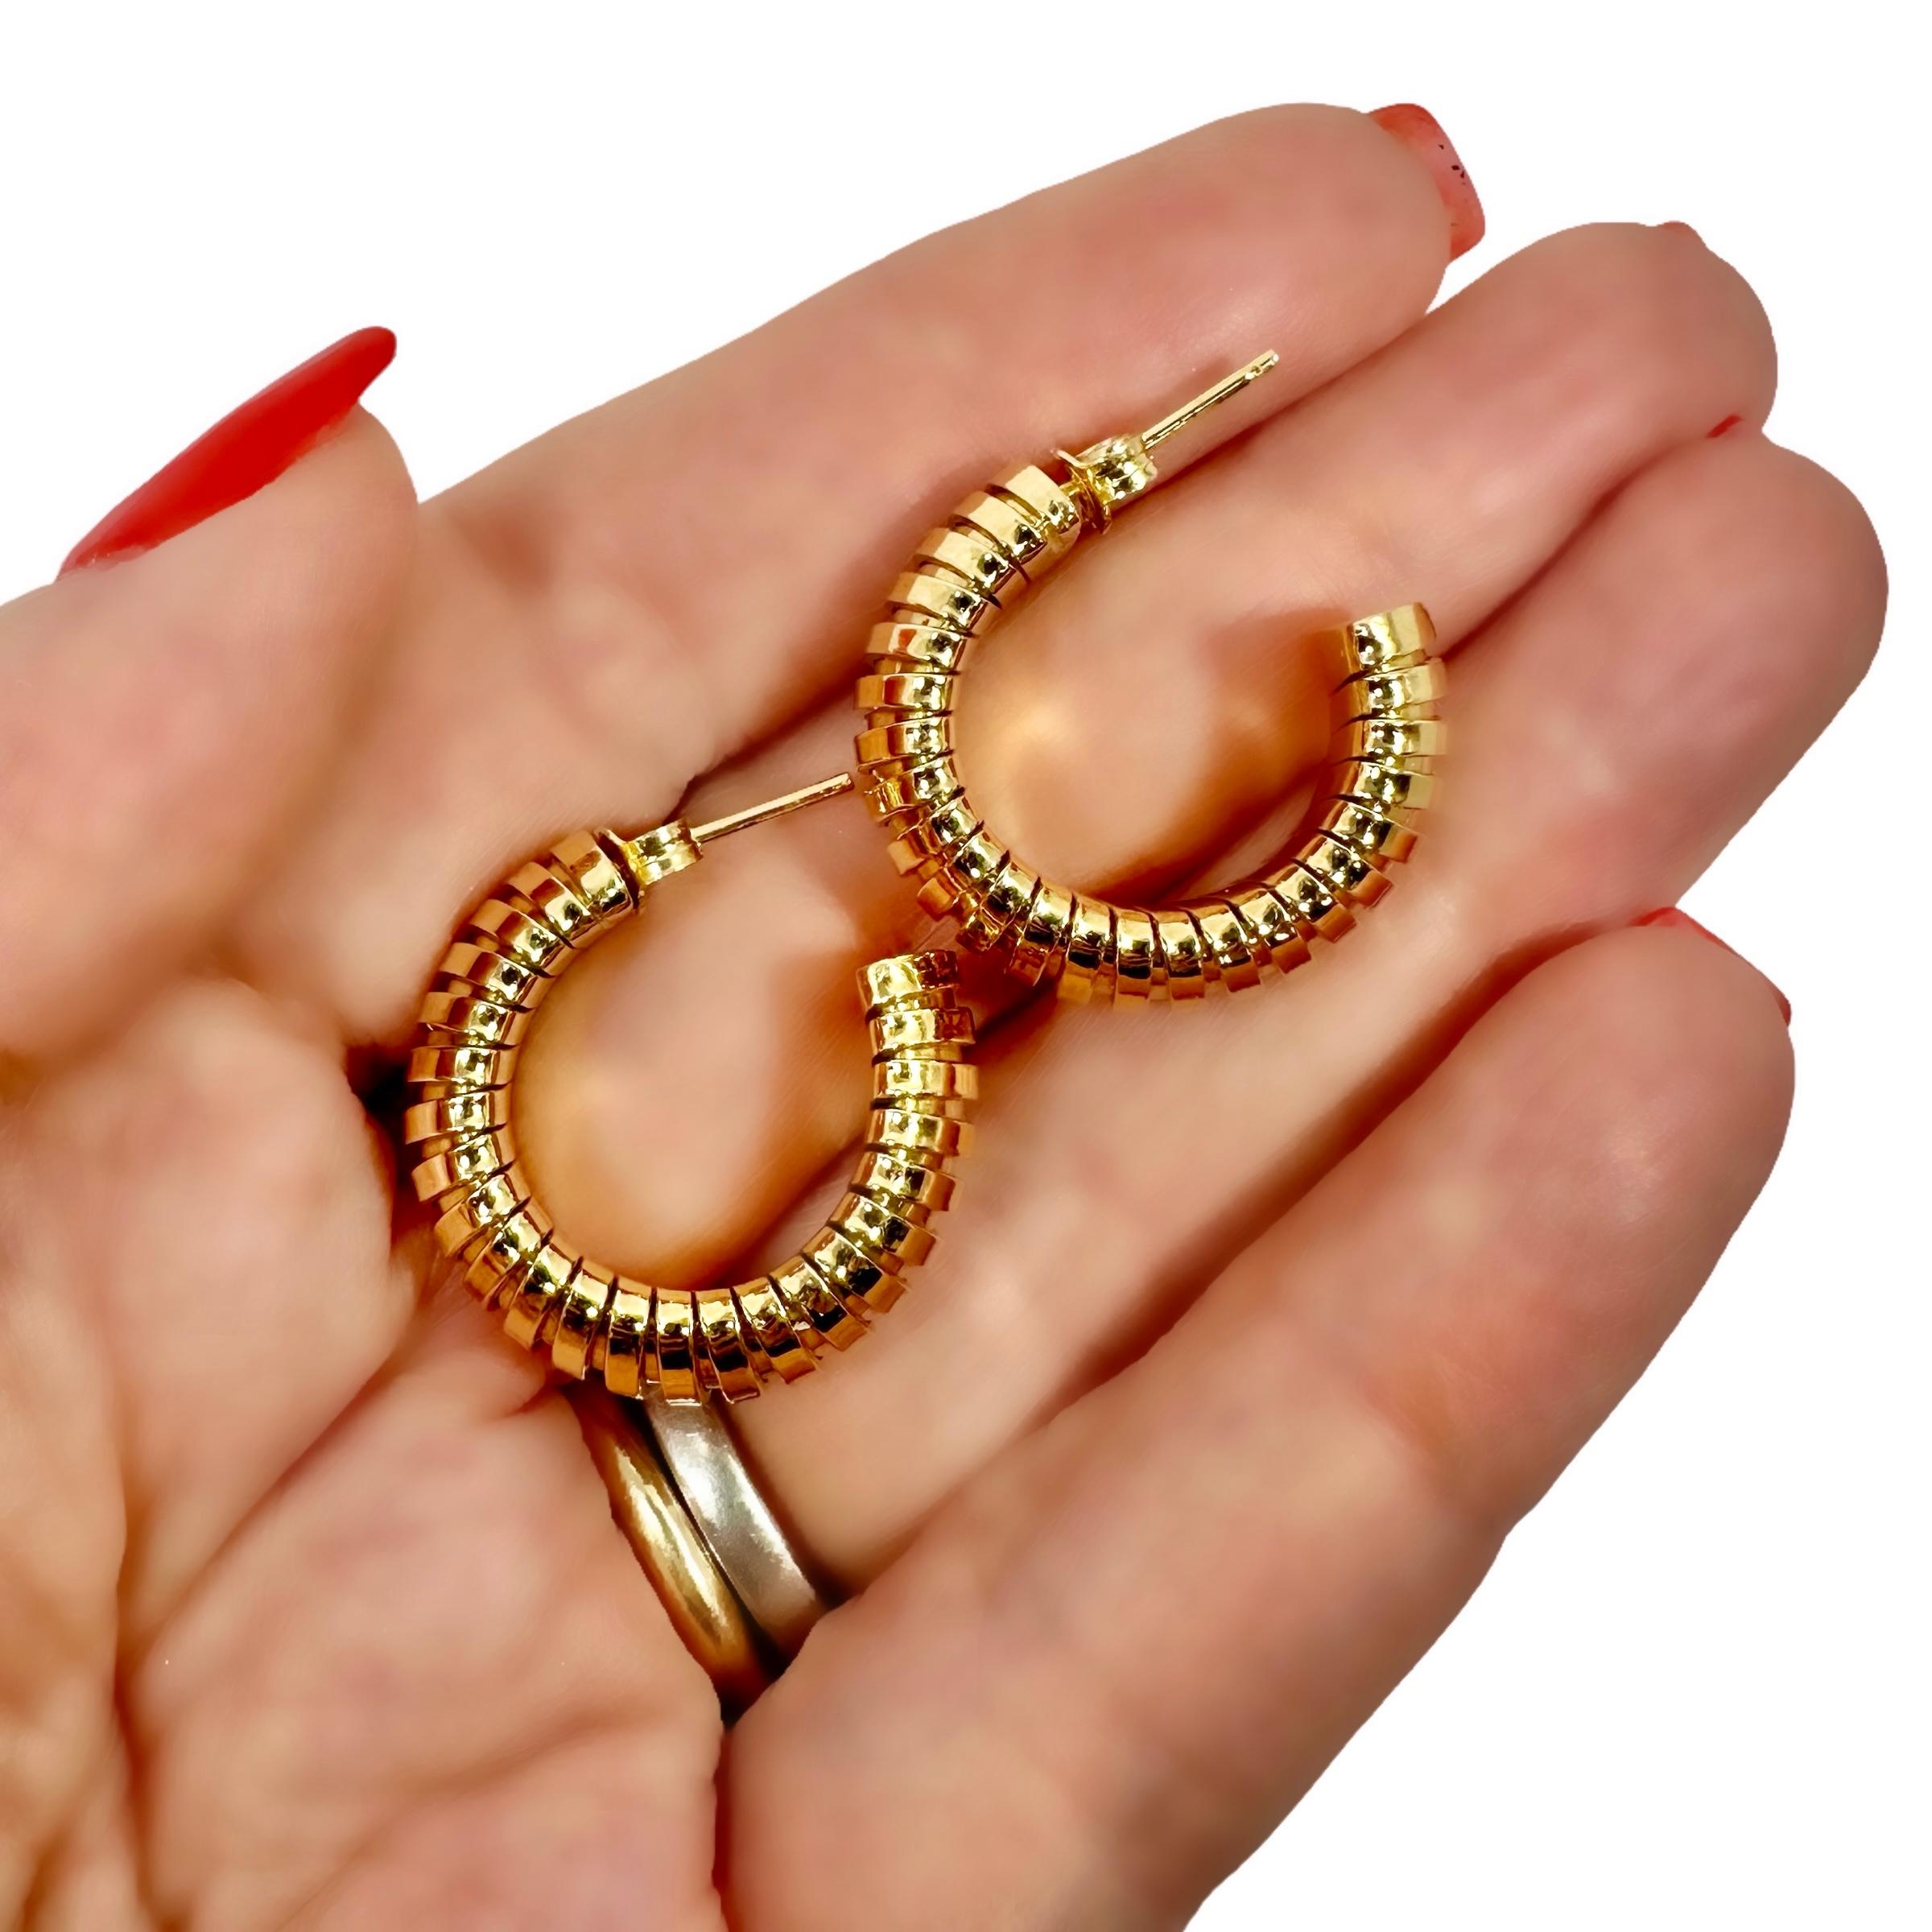 Pristine Vintage Italian Tubogas 18k Gold Hoop Earrings by Herco For Sale 4